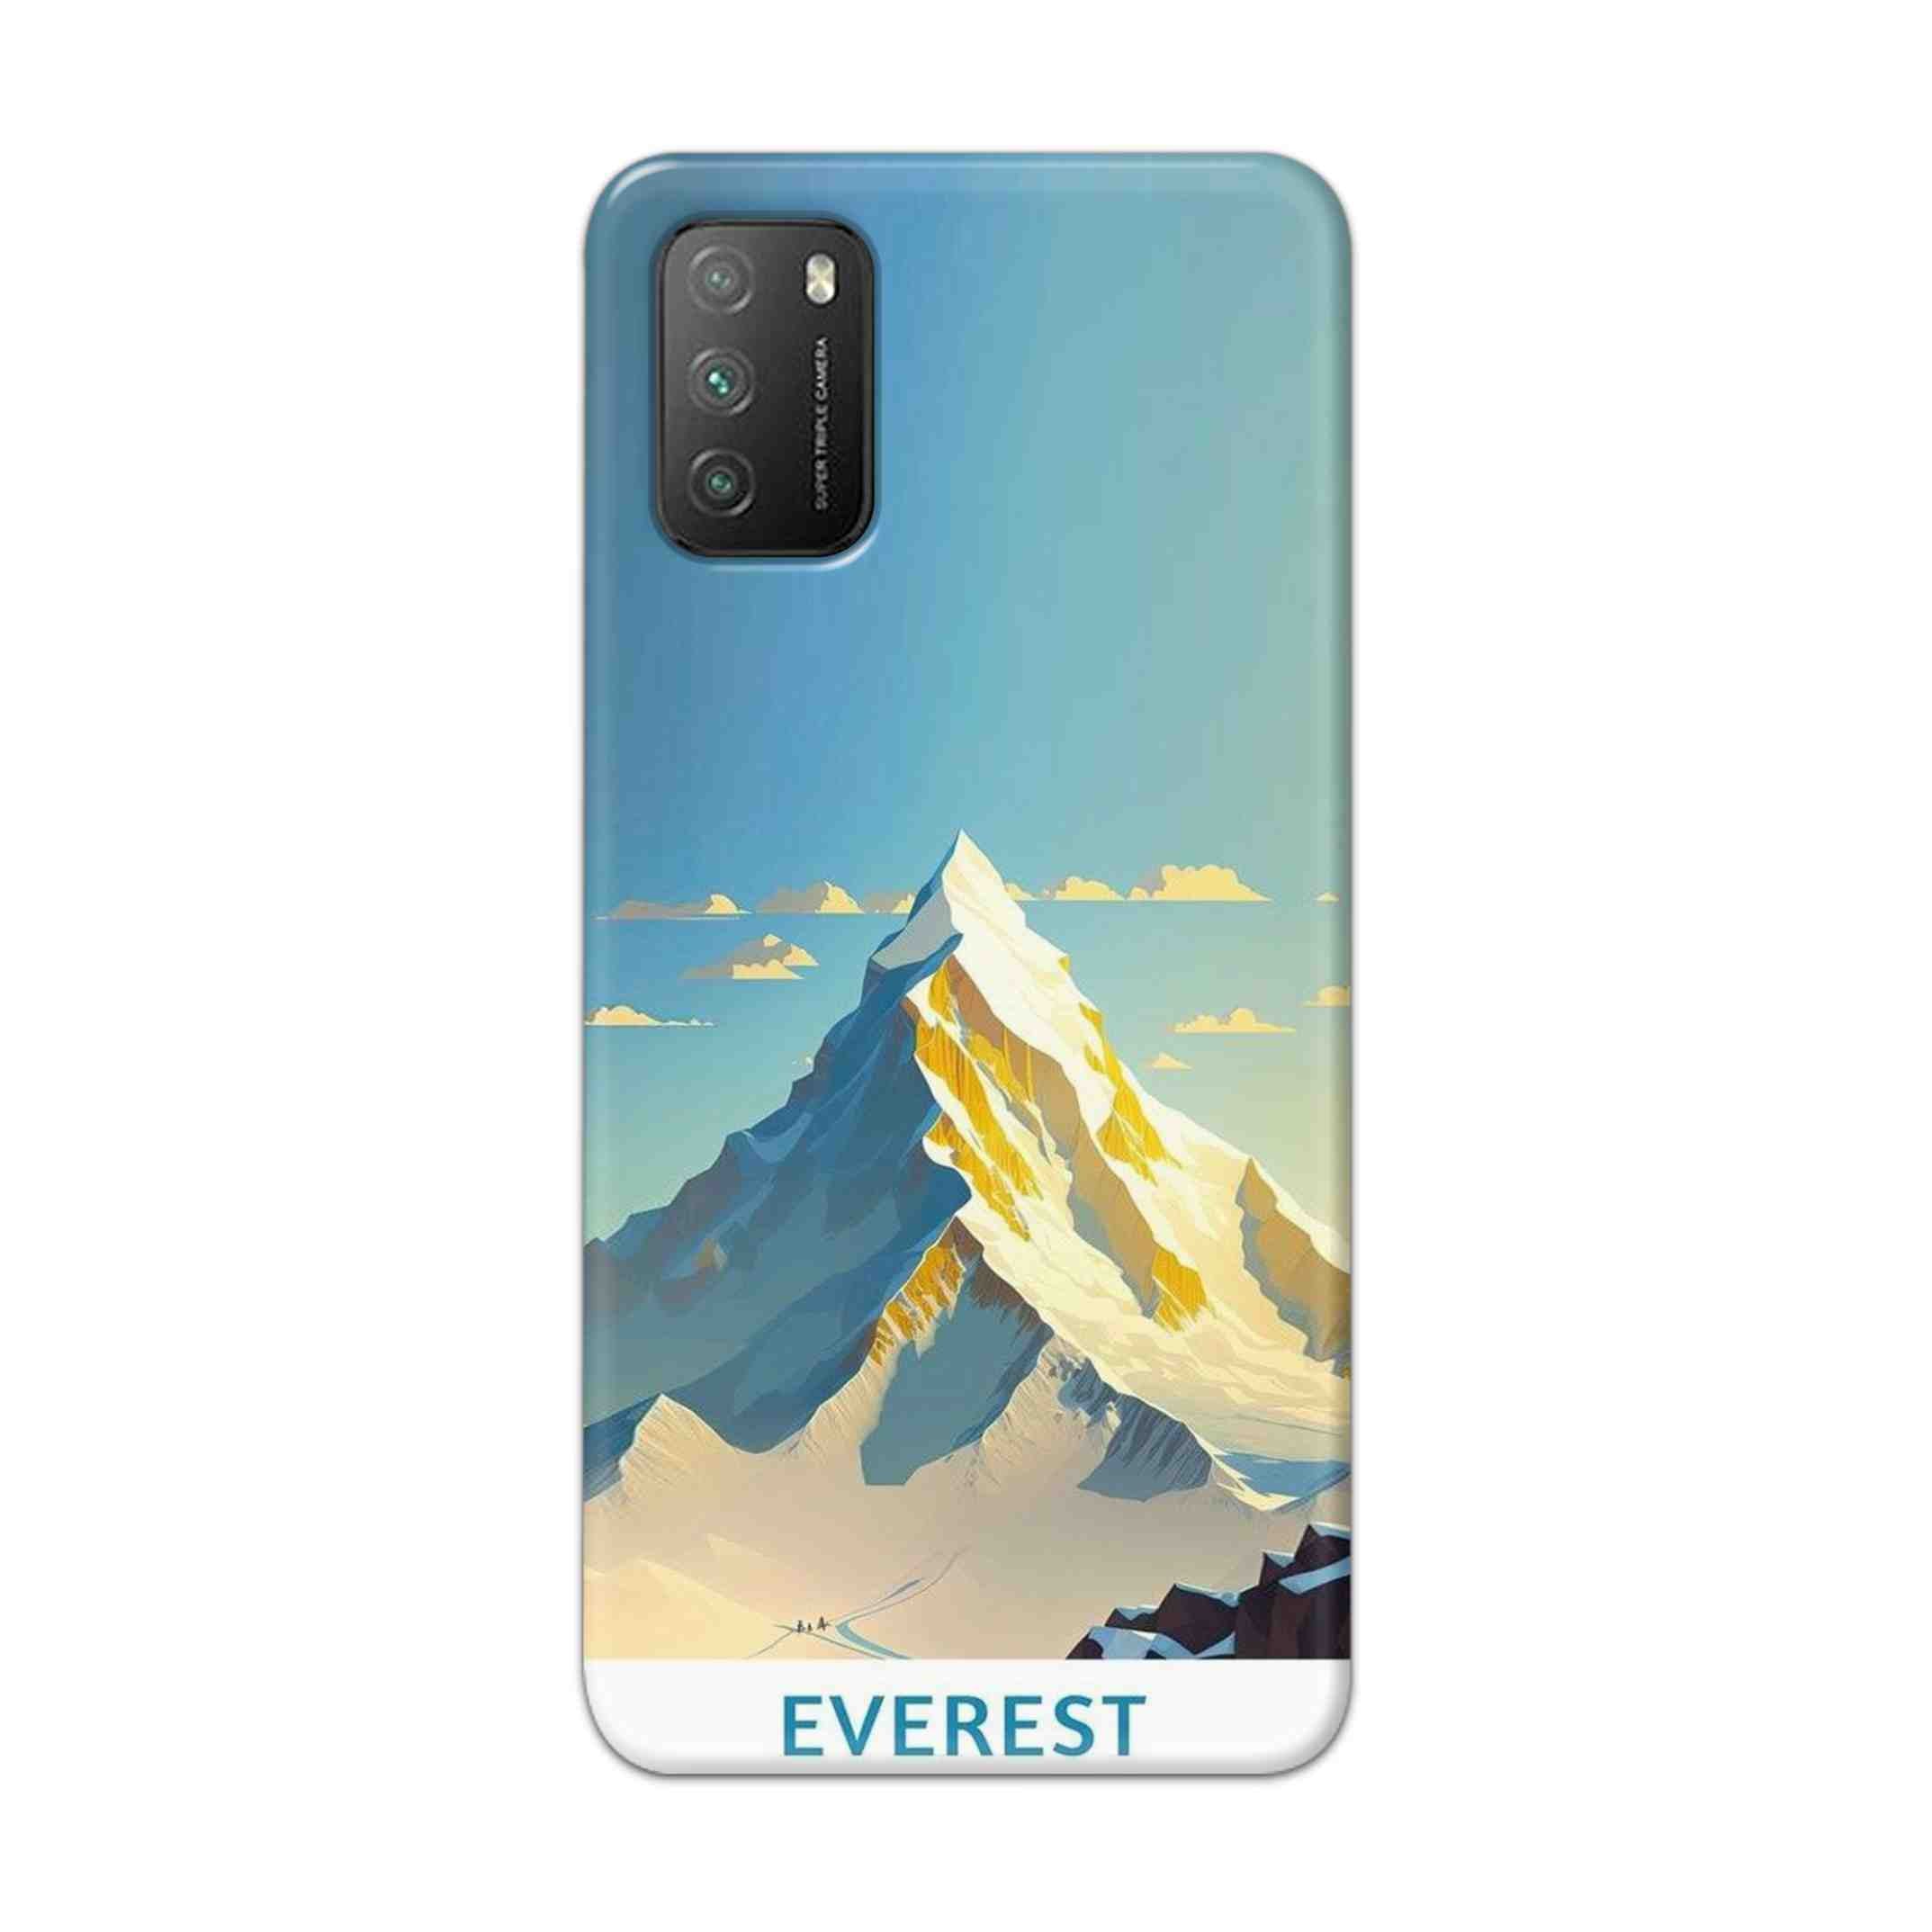 Buy Everest Hard Back Mobile Phone Case Cover For Poco M3 Online